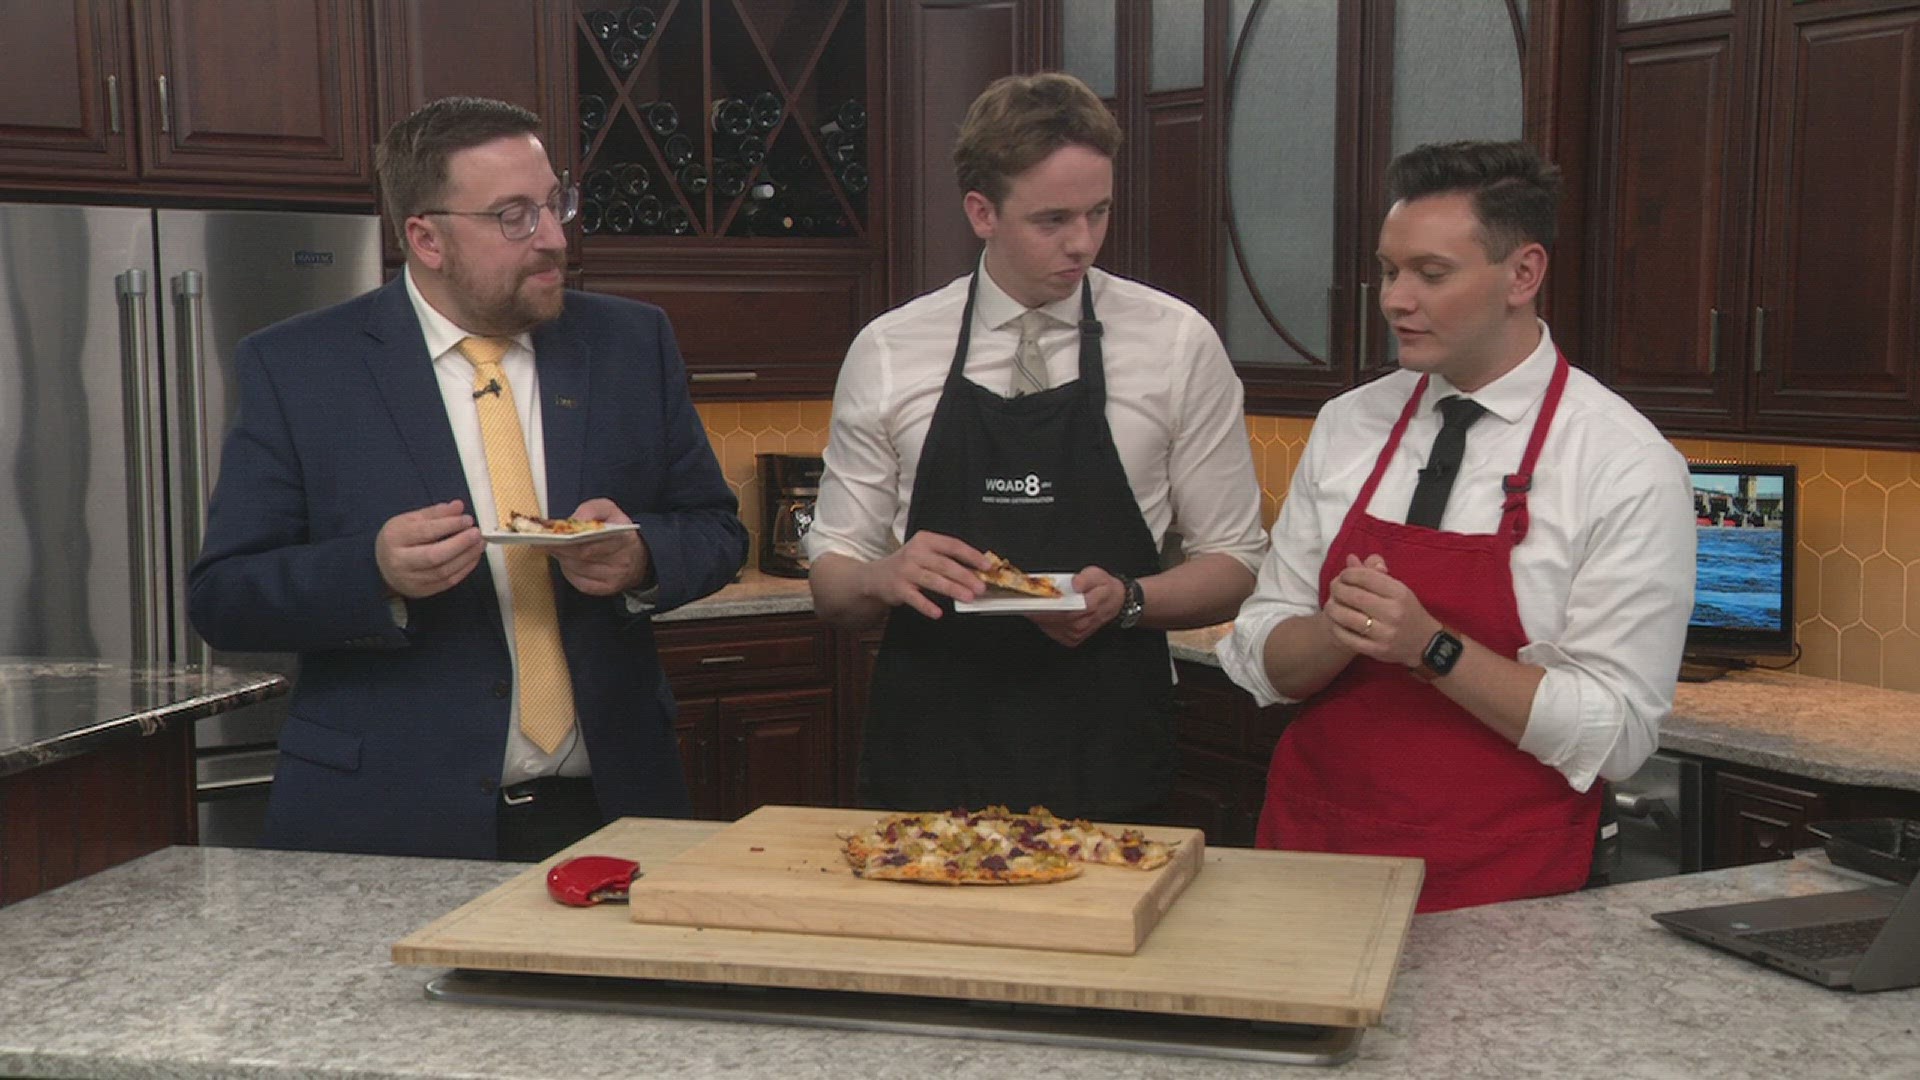 News 8's Joe McCoy, Andrew Stutzke and David Bohlman try Thanksgiving pizza.